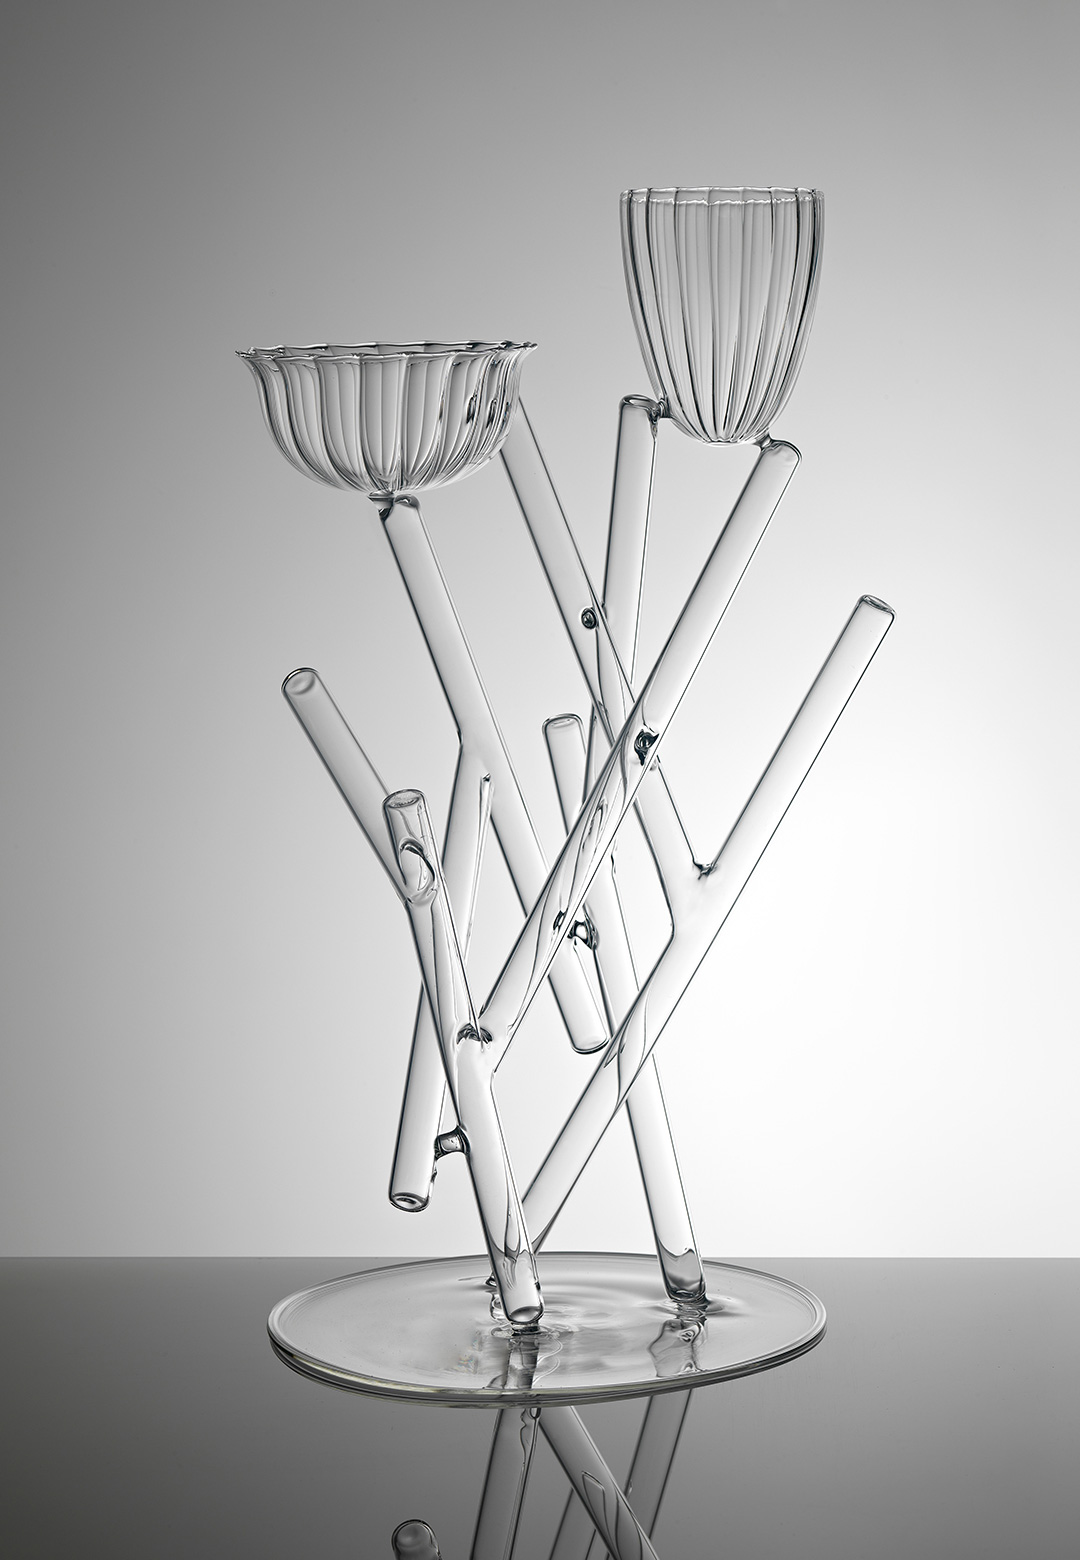 Mario Trimarchi shapes glass into a sculptural interpretation of 'Still Life'